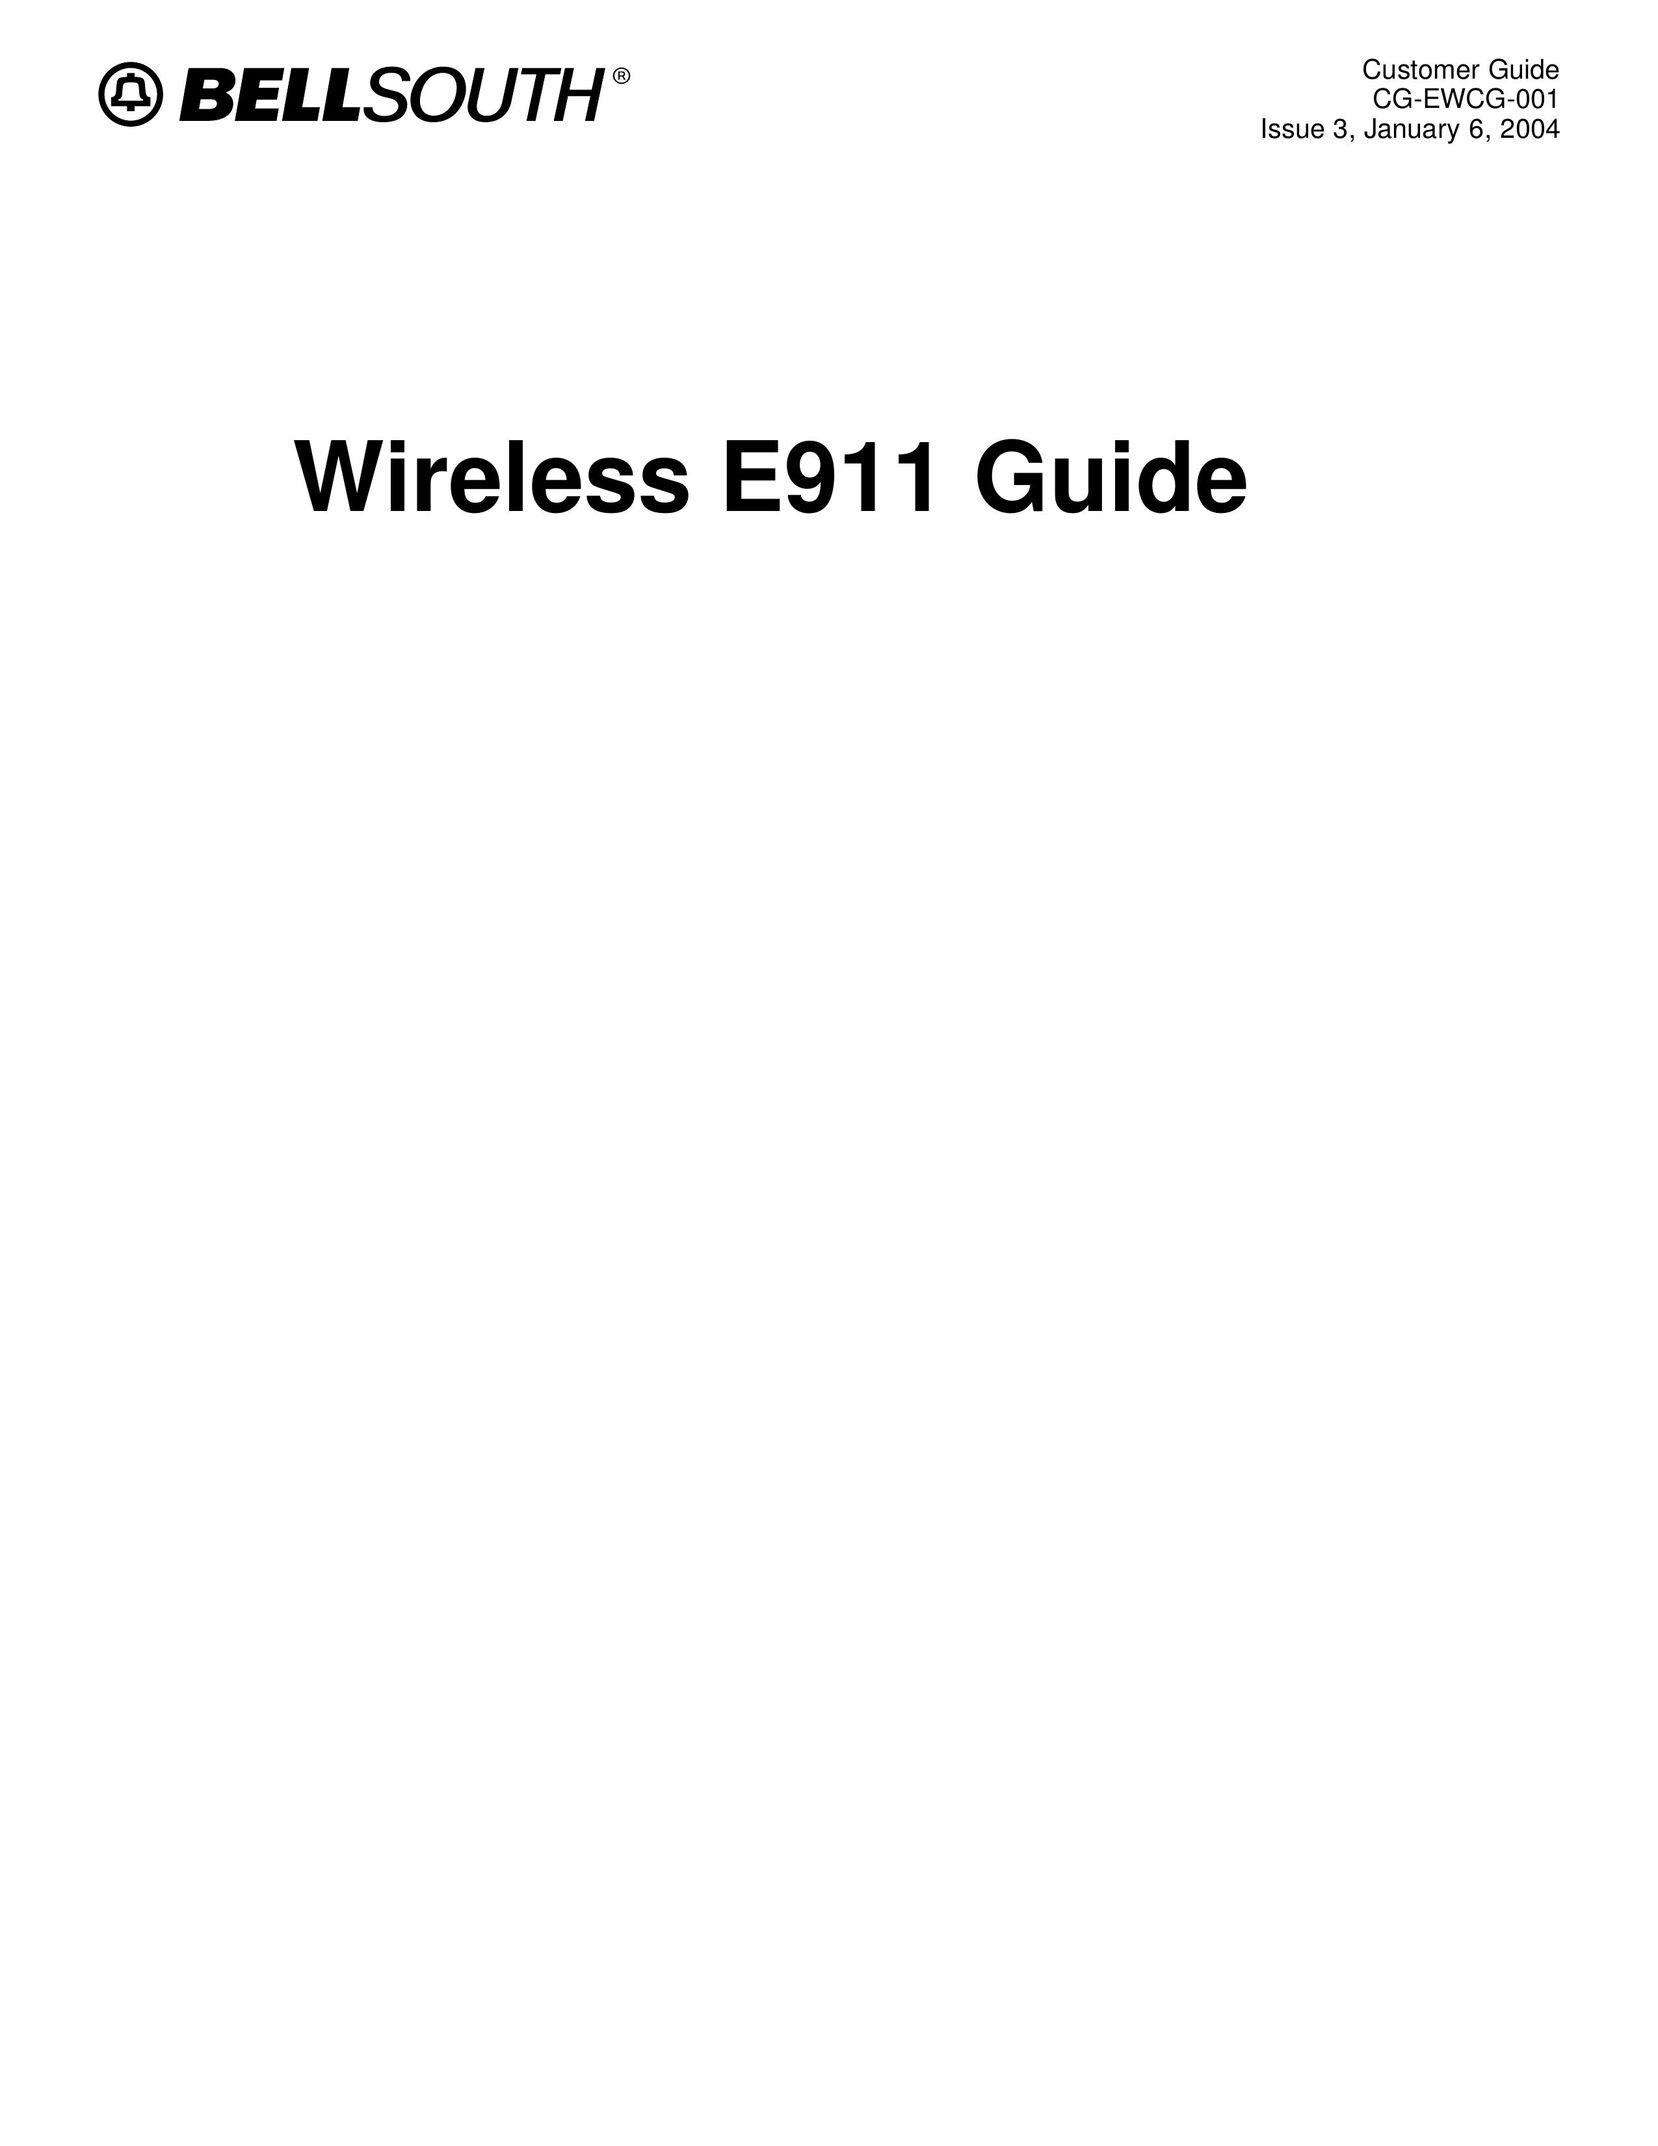 BellSouth E911 Network Router User Manual